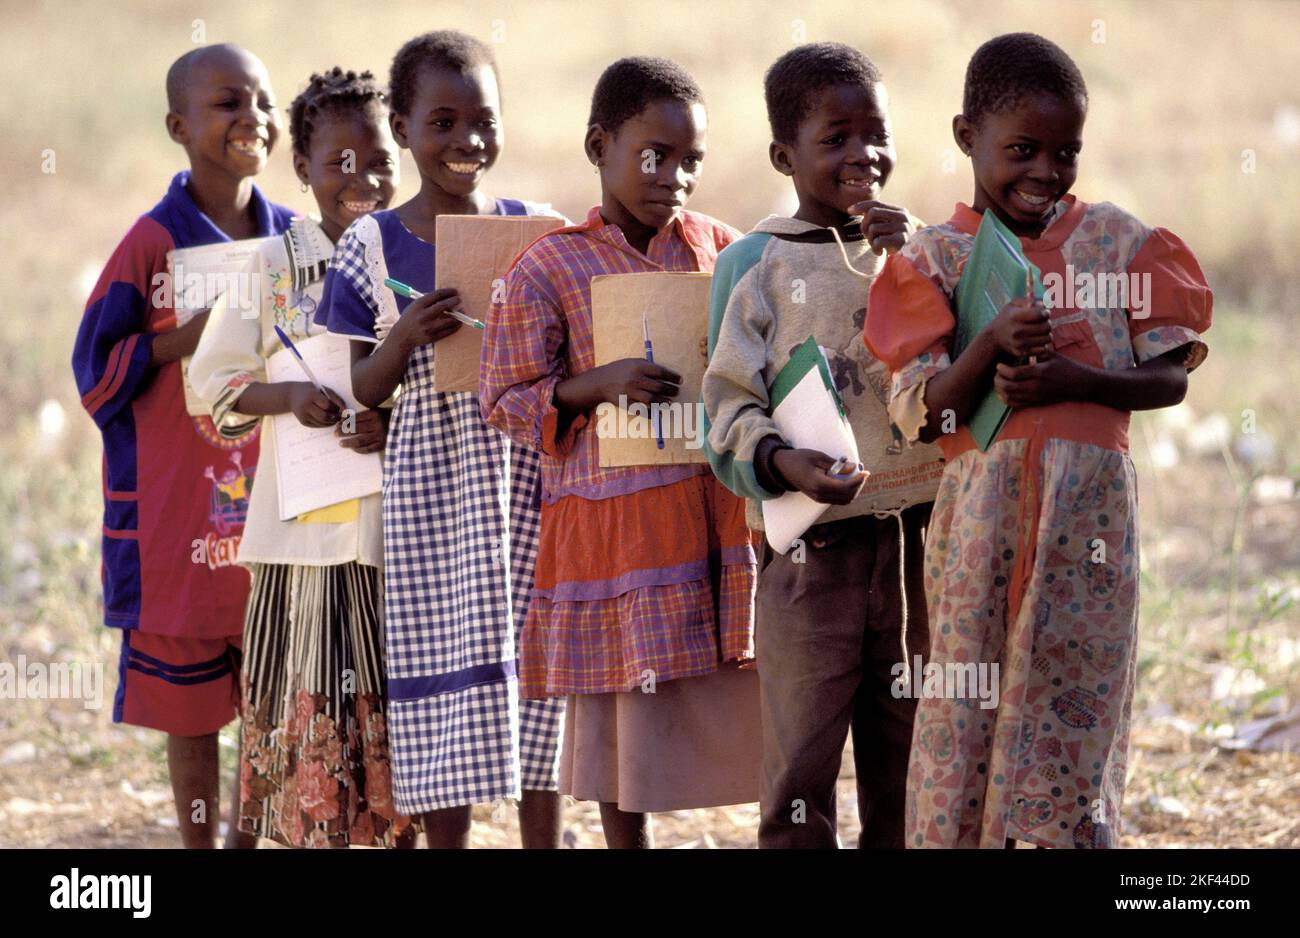 Burkina Faso, Fada; Schoolchildren with notebooks standing in line outside. Stock Photo